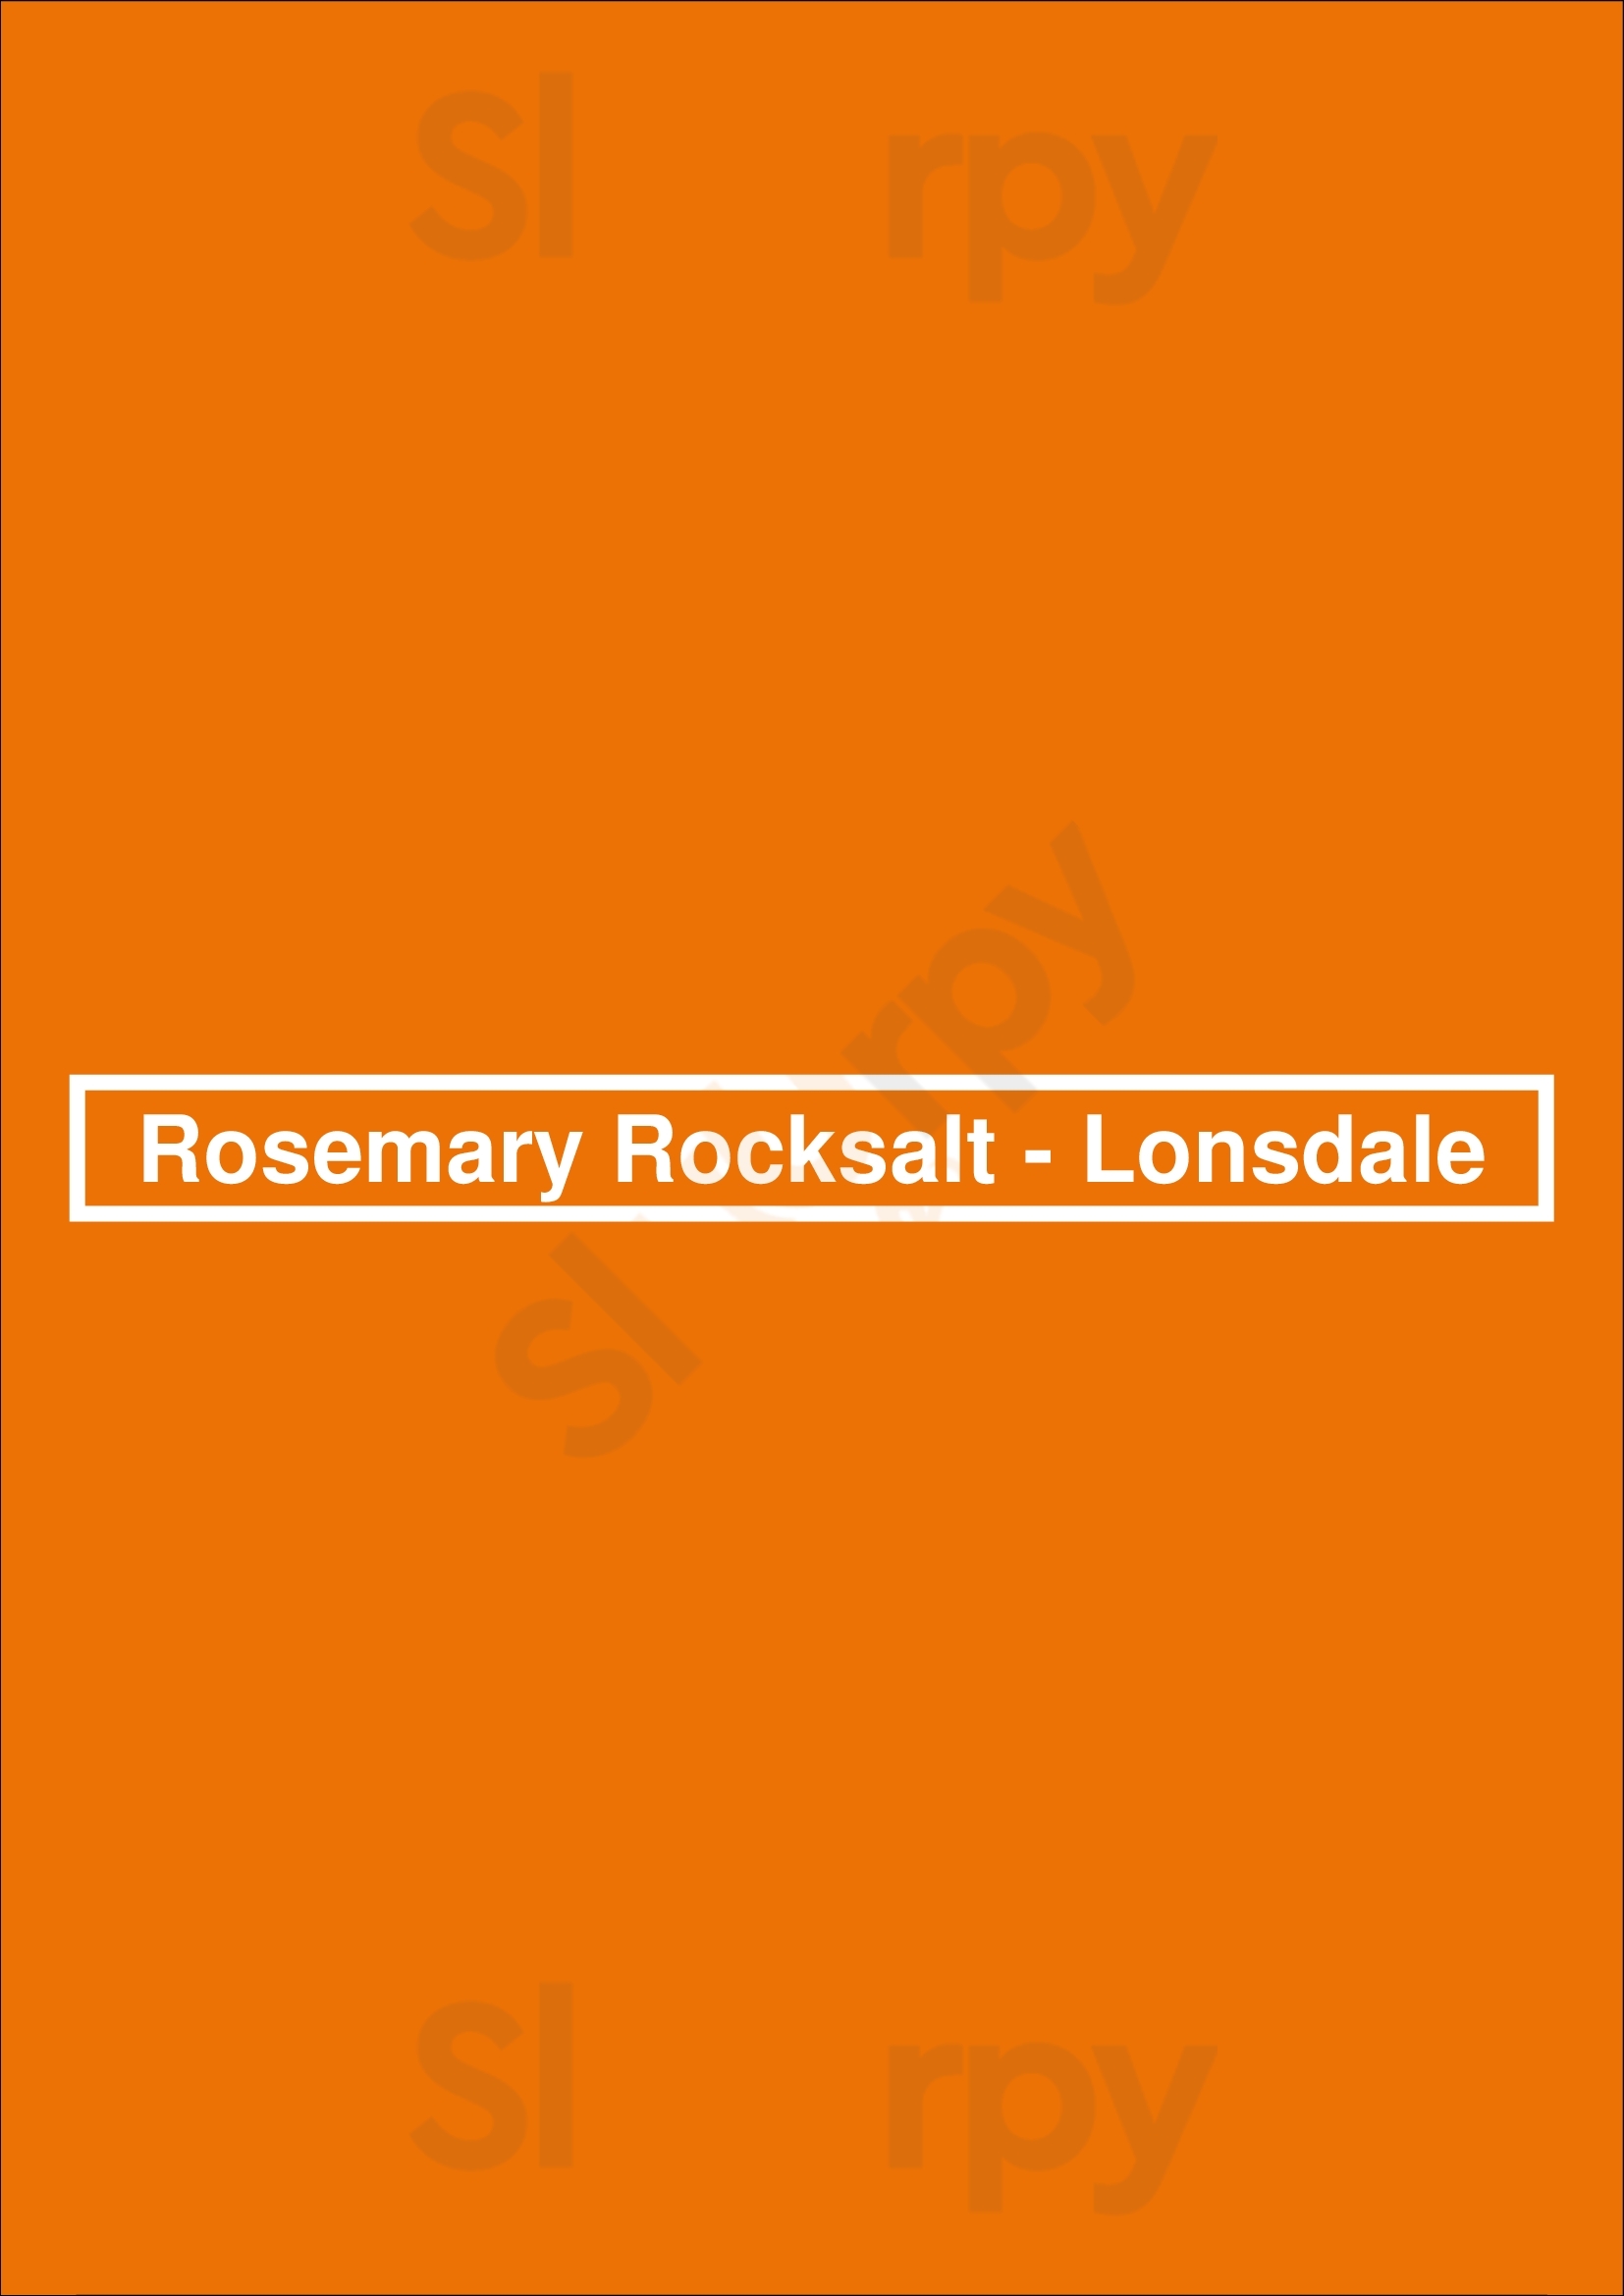 Rosemary Rocksalt - Lonsdale North Vancouver Menu - 1